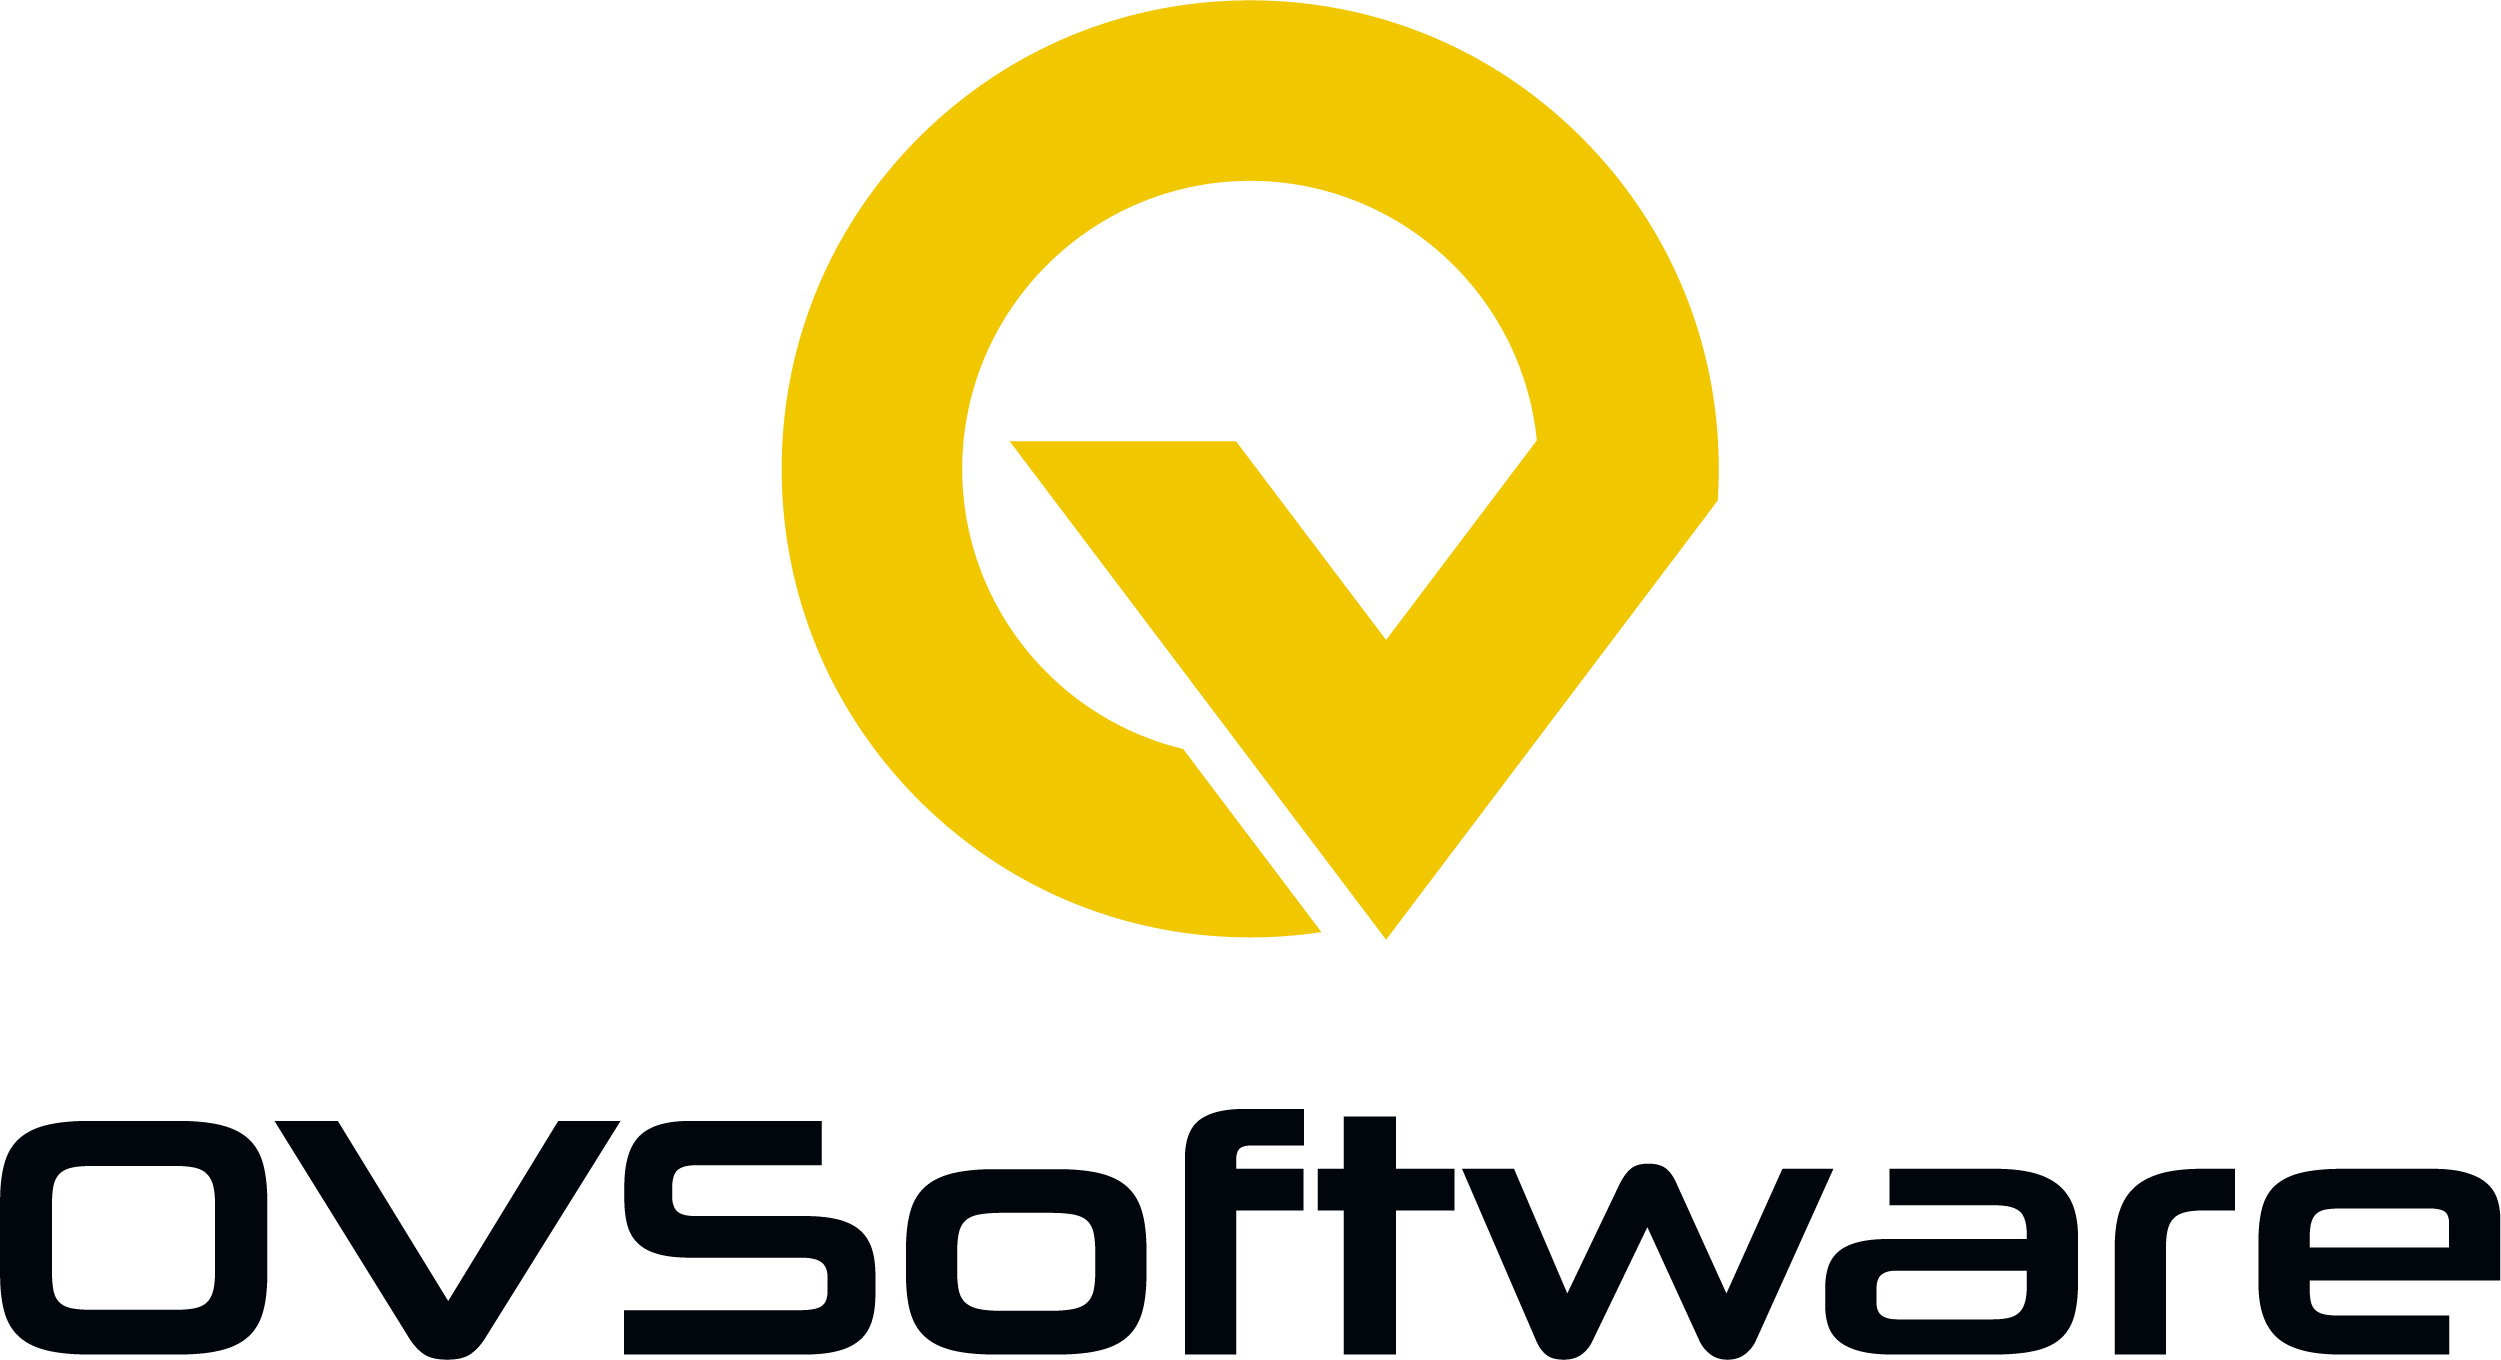 OVSoftware B.V. logo